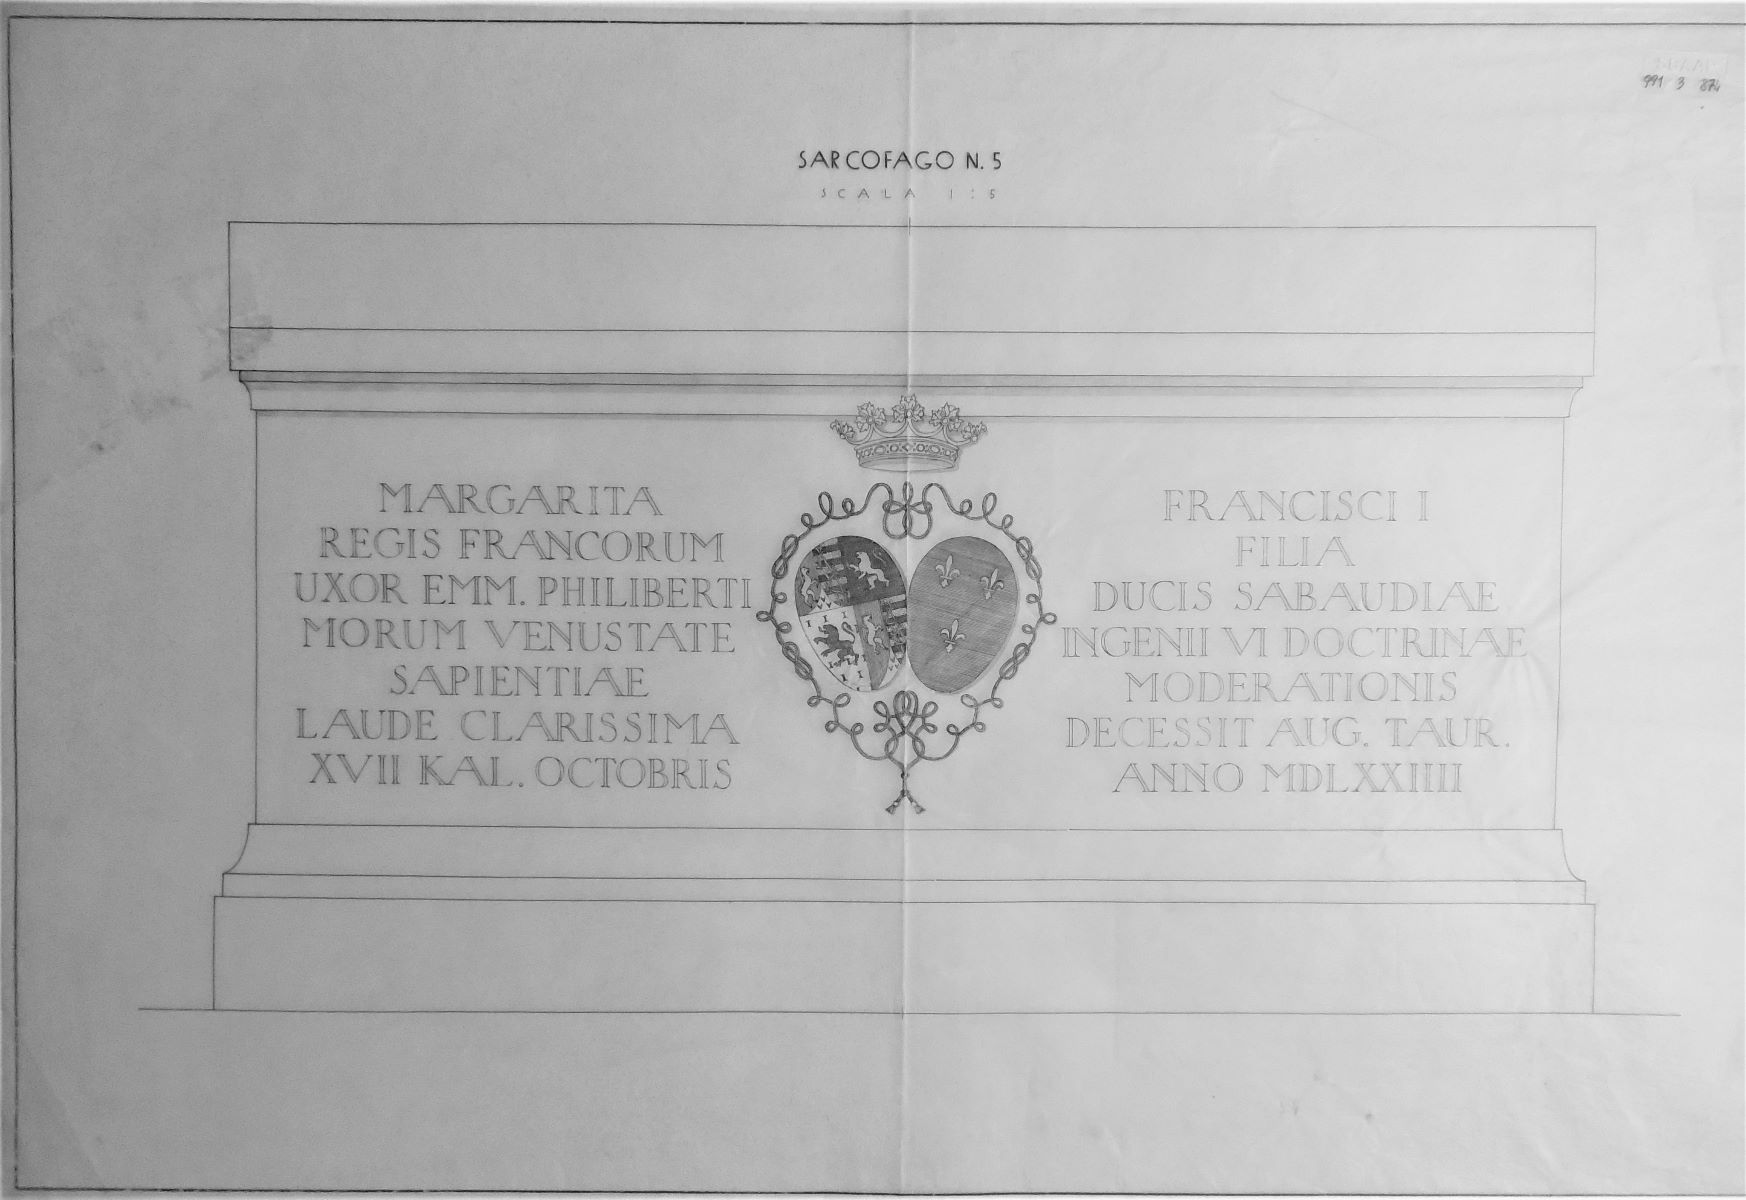 Sacra di San Michele/ Sarcofago n. 5 - scala 1:5, Sacra di San Michele a Sant'Ambrogio di Susa (TO) - Sarcofago n. 5 - scala 1:5 (disegno) di Chierici Umberto (cerchia) (secondo quarto sec. XX)